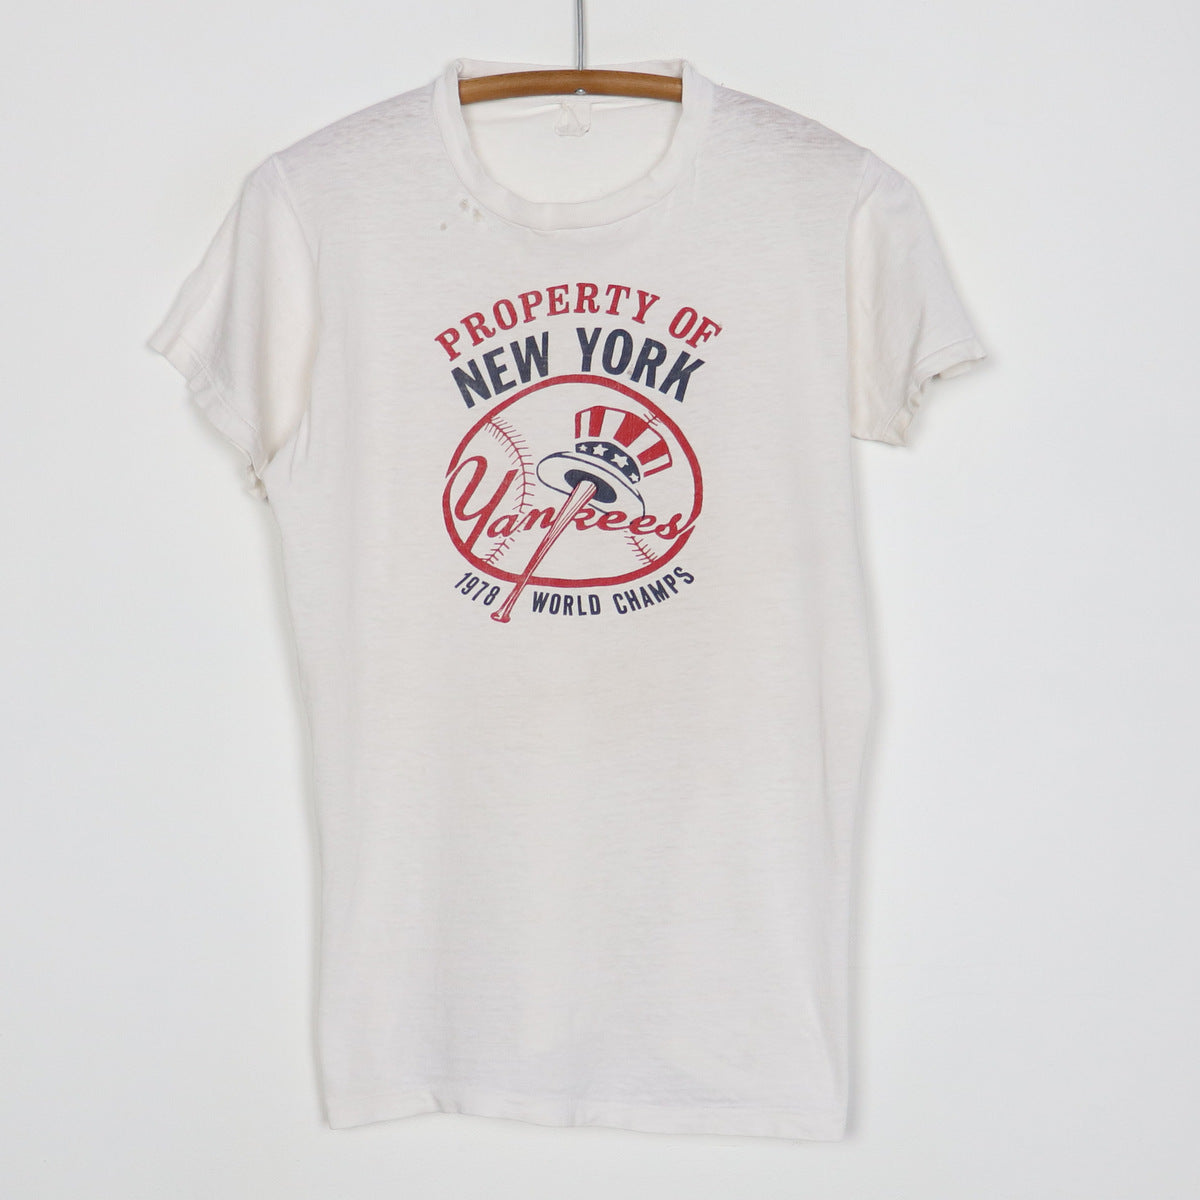 New Era Yankees Champs T-Shirt